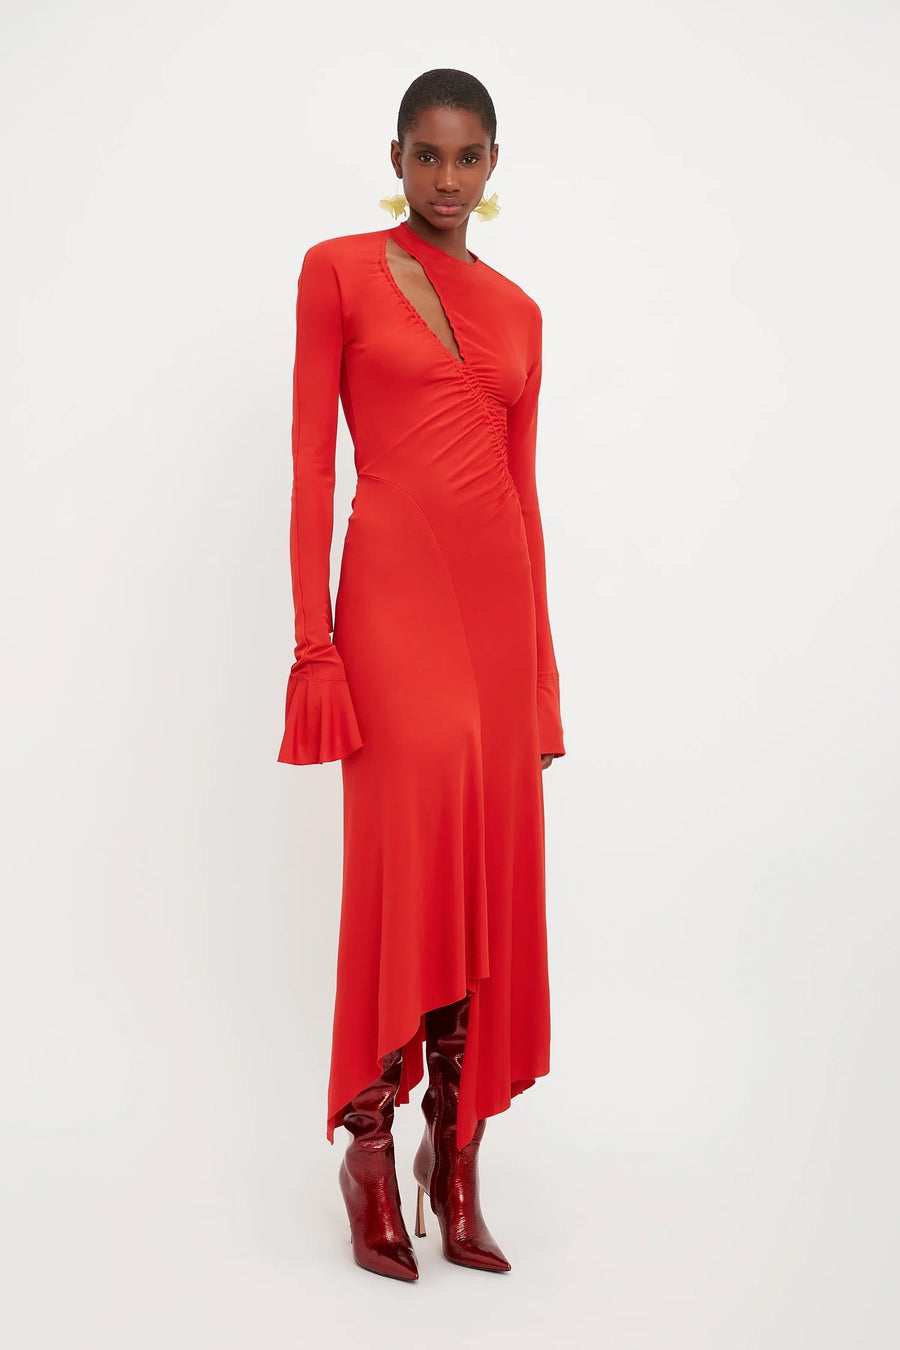 victoria beckham Asymmetric Slash Jersey Dress red figure side